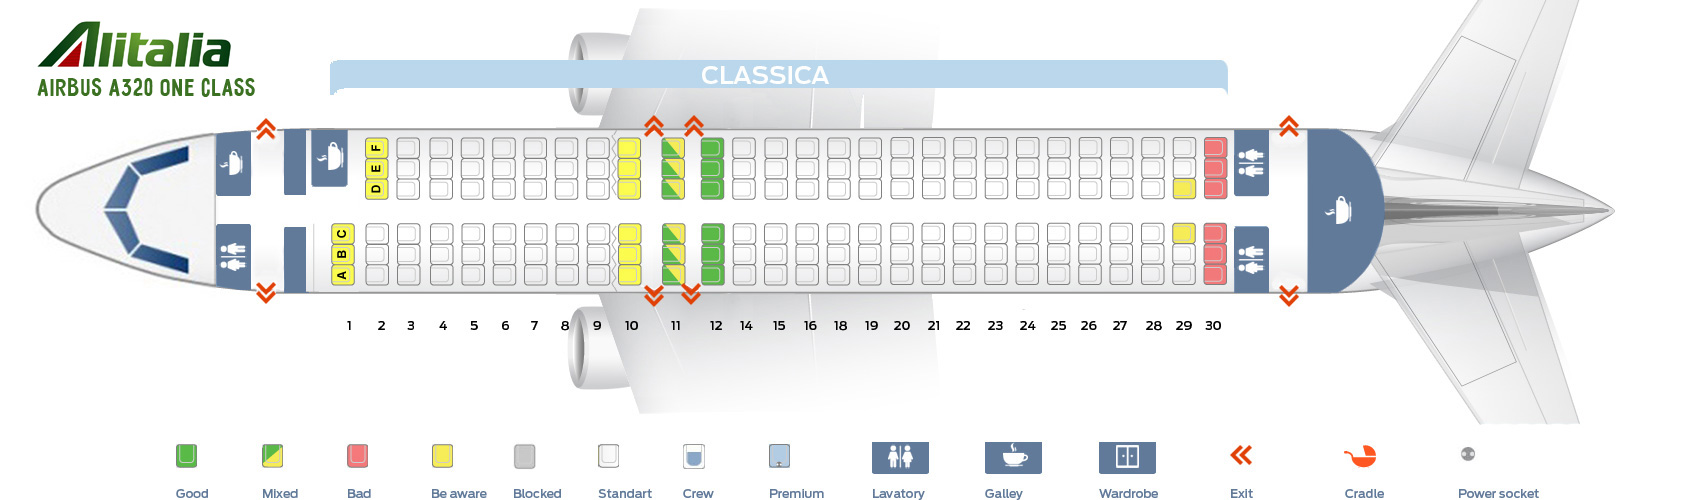 Alitalia Seating Chart